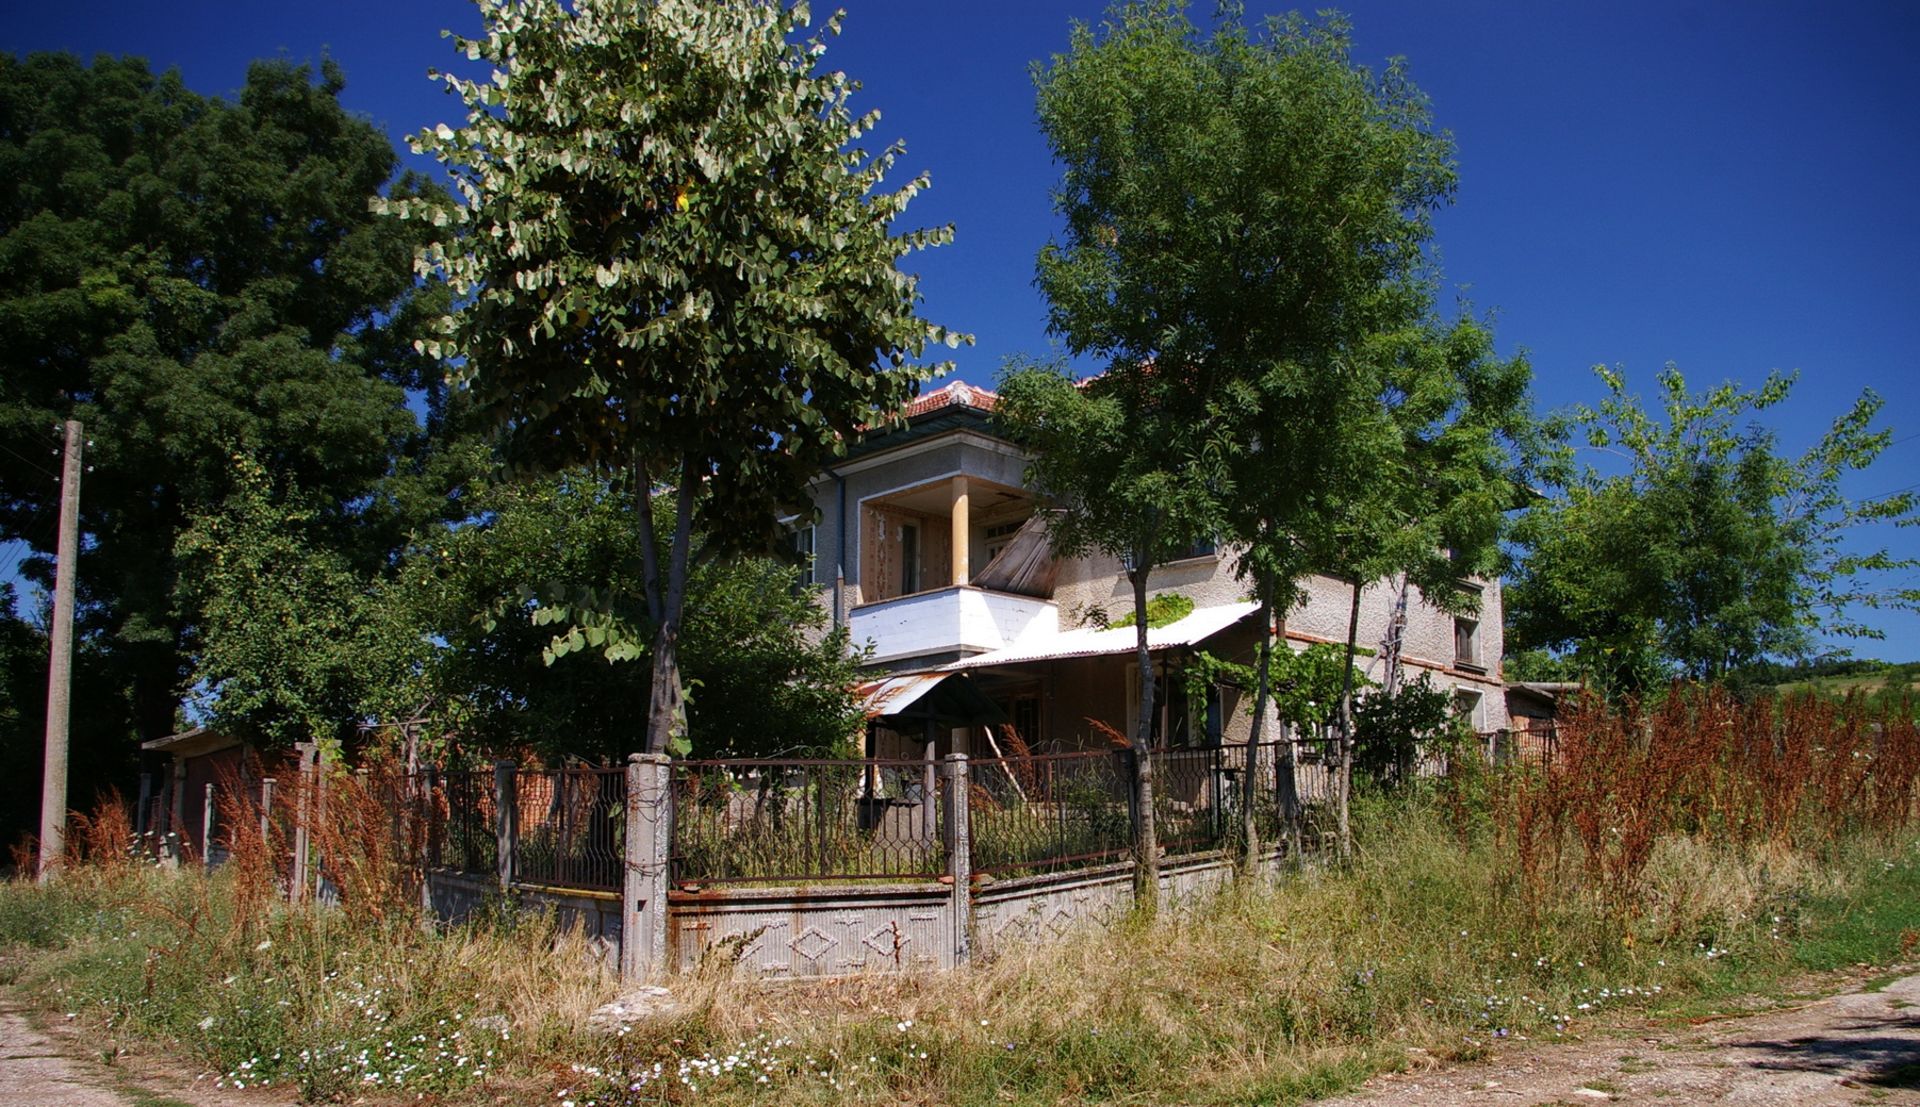 MASSIVE 6 BED ON CORNER PLOT DRUJBA, VIDIN, BULGARIA - Image 4 of 21